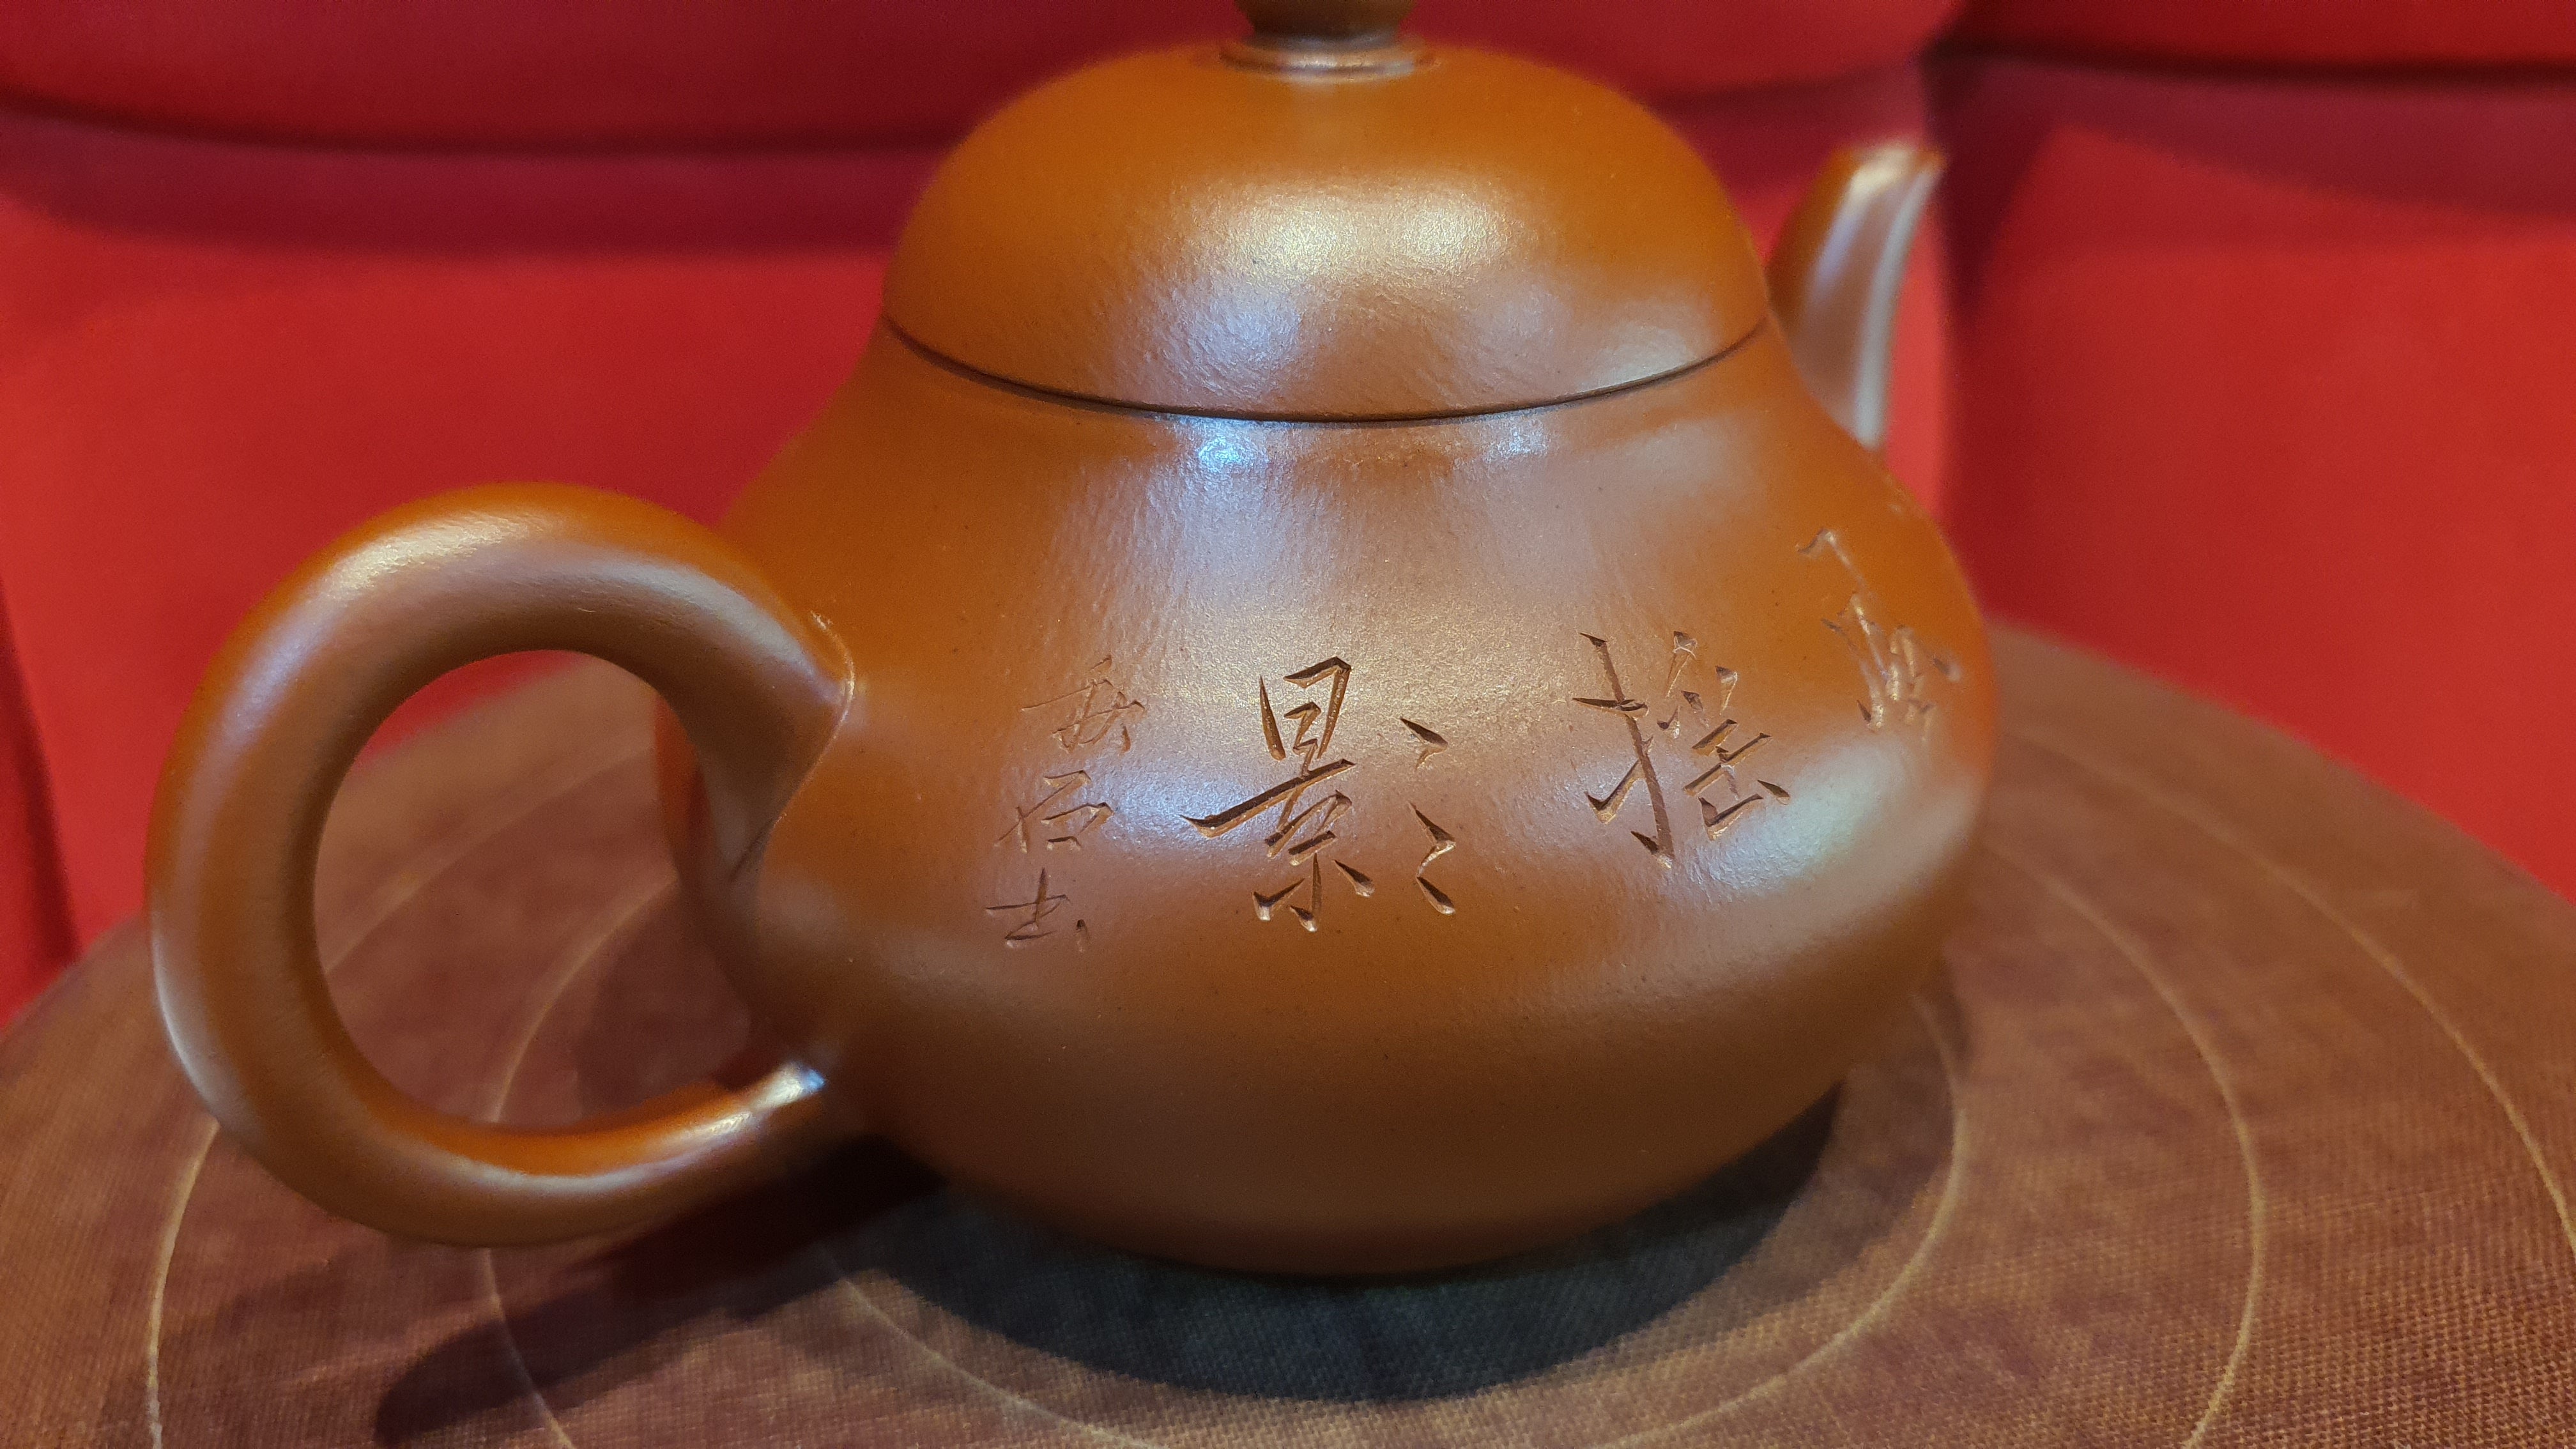 Li Xing 梨形, with Engraving (Bamboo) 带刻绘(竹), XiaoMeiYao ZhuNi 小煤窑朱泥, 140ml, made by Craftslady Xu Quan Fang 许全芳。